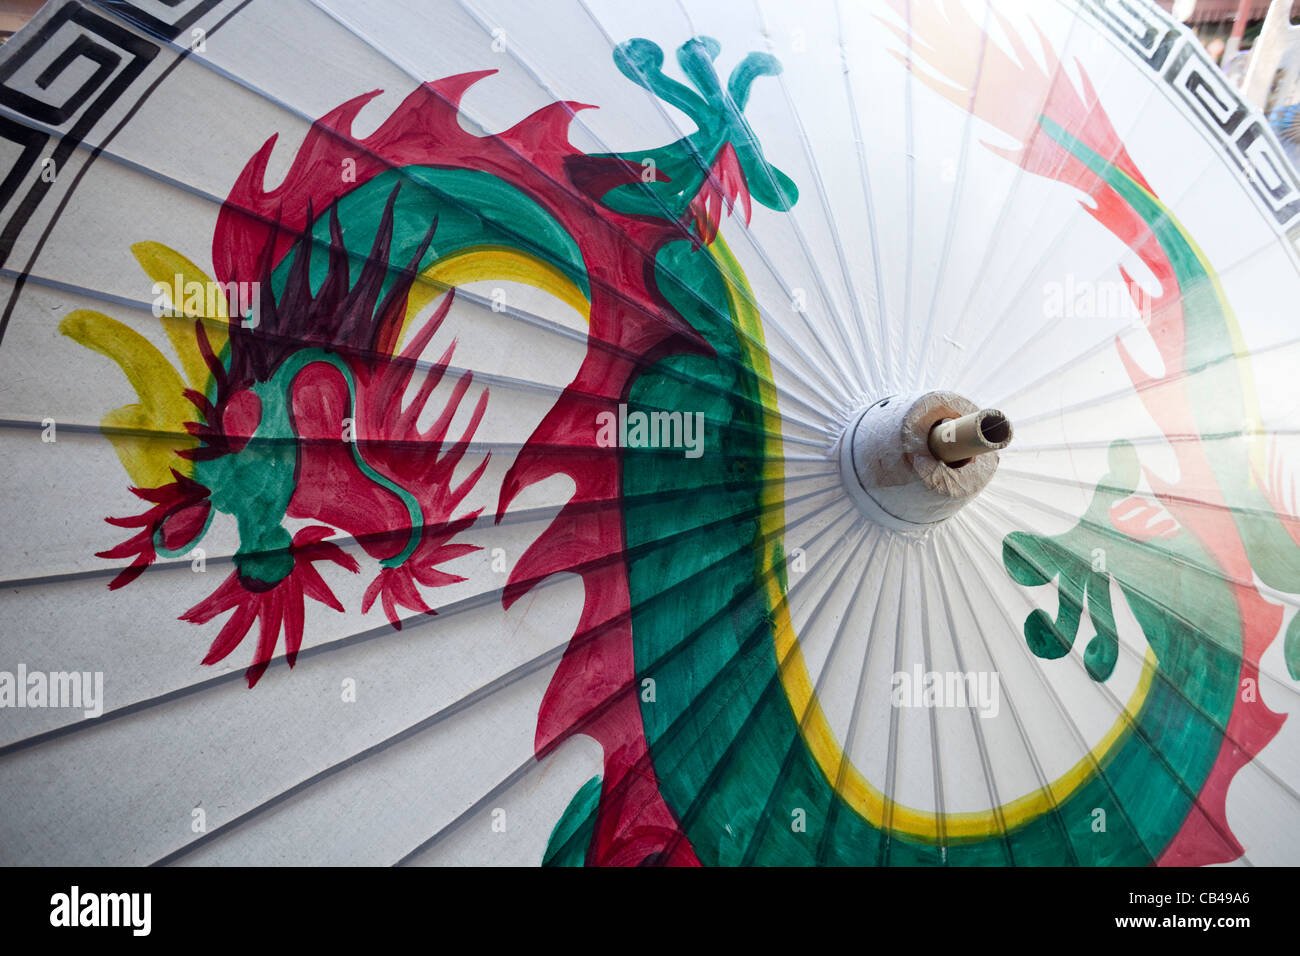 Thailand, Chiang Mai, Borsang Umbrella Village, Artwork of Dragon on Giant Umbrella Stock Photo